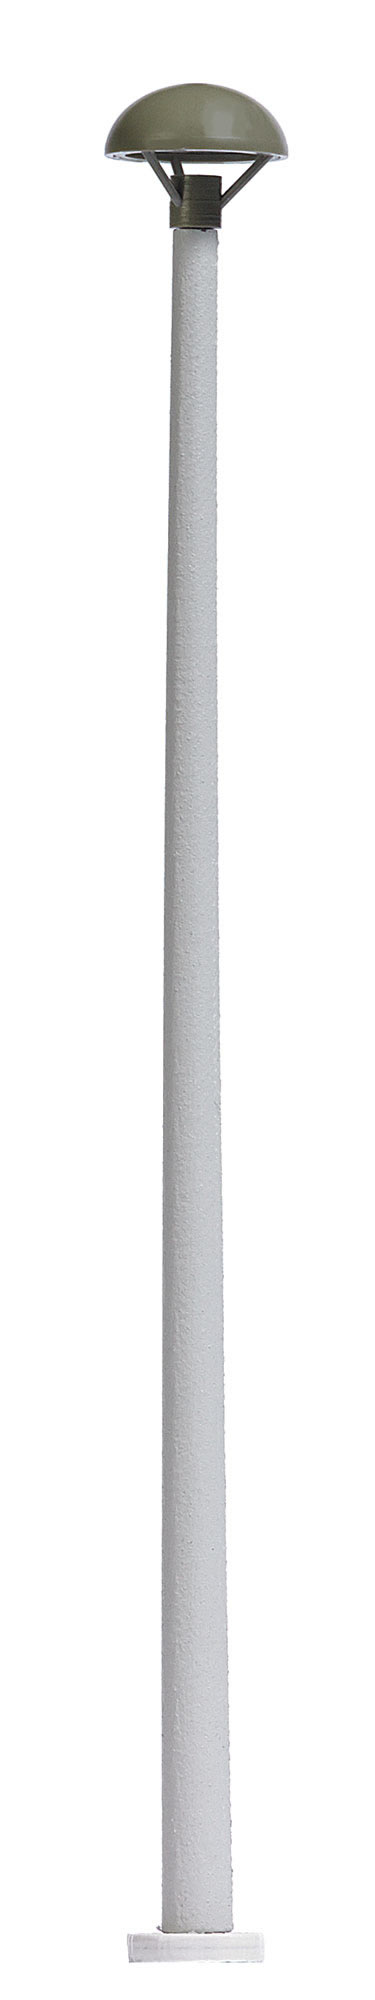 Busch 4113 - Mushroom Lamp with Concrete Mast